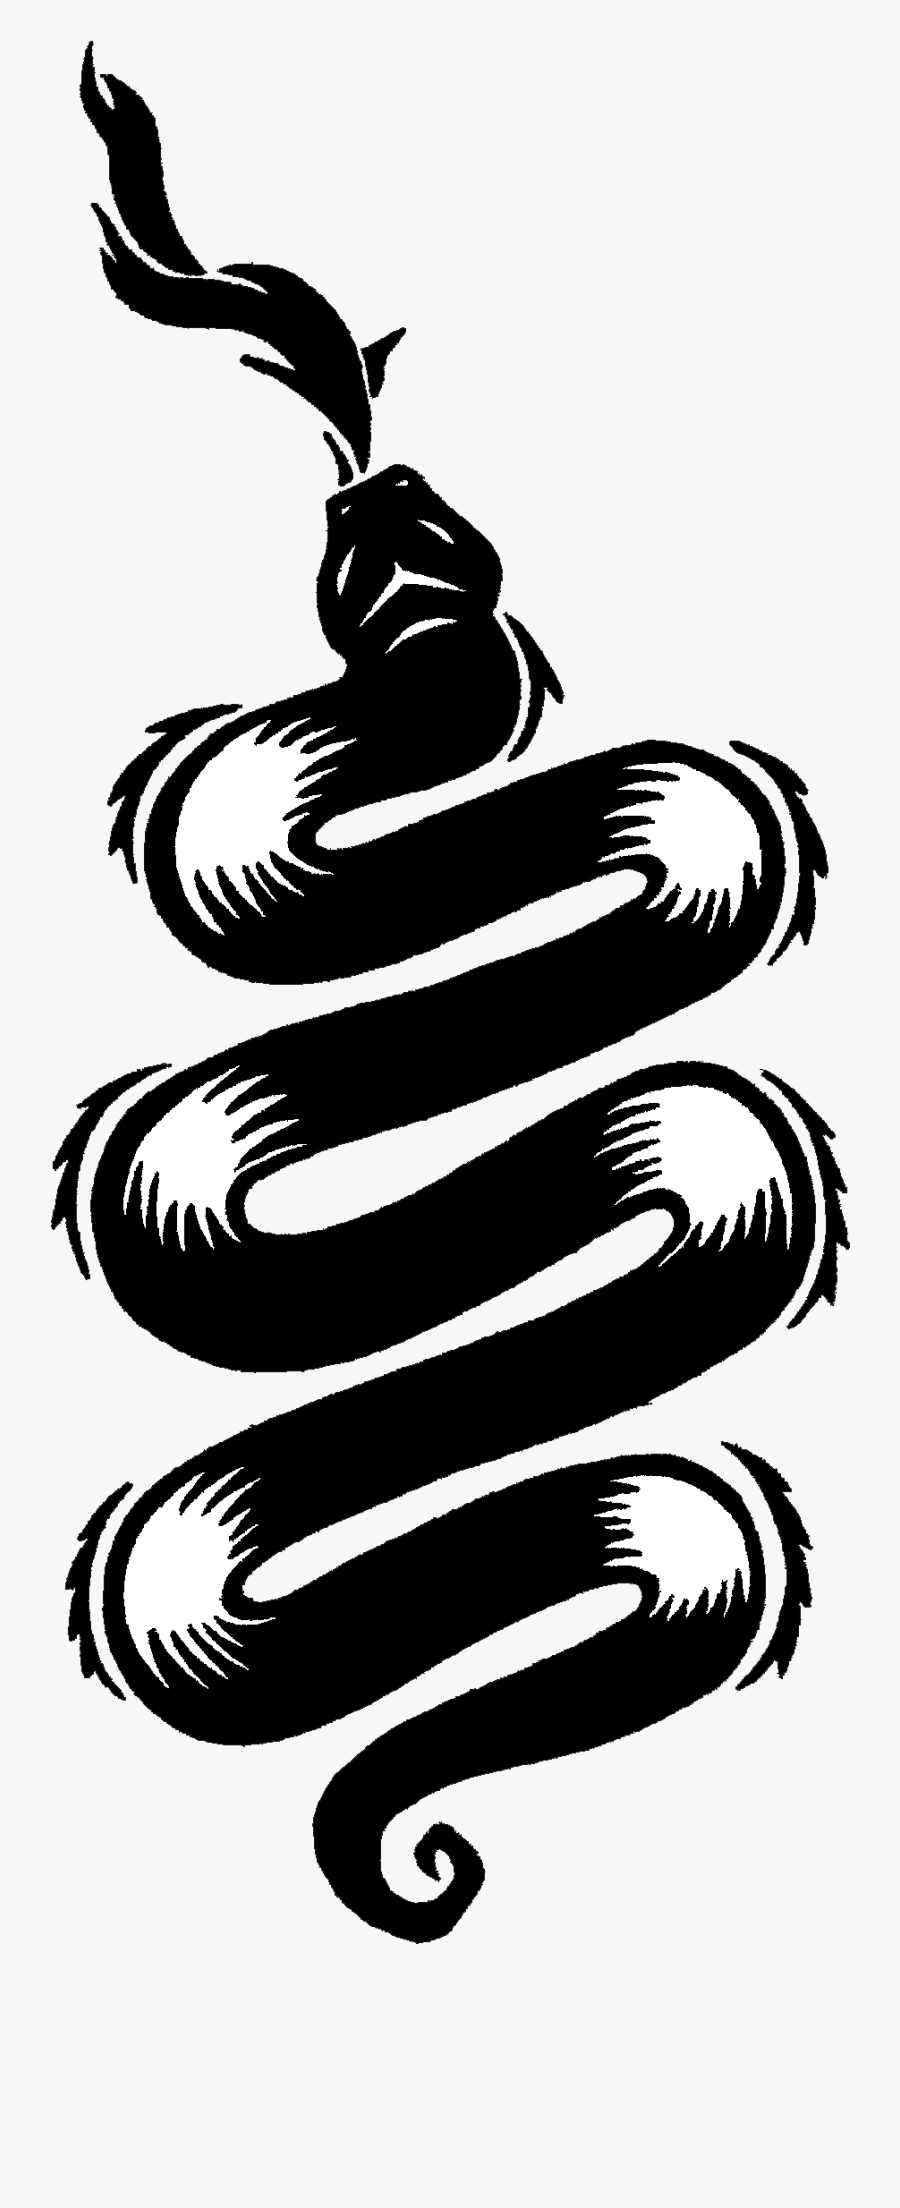 Transparent Snake Tattoo Png, Transparent Clipart